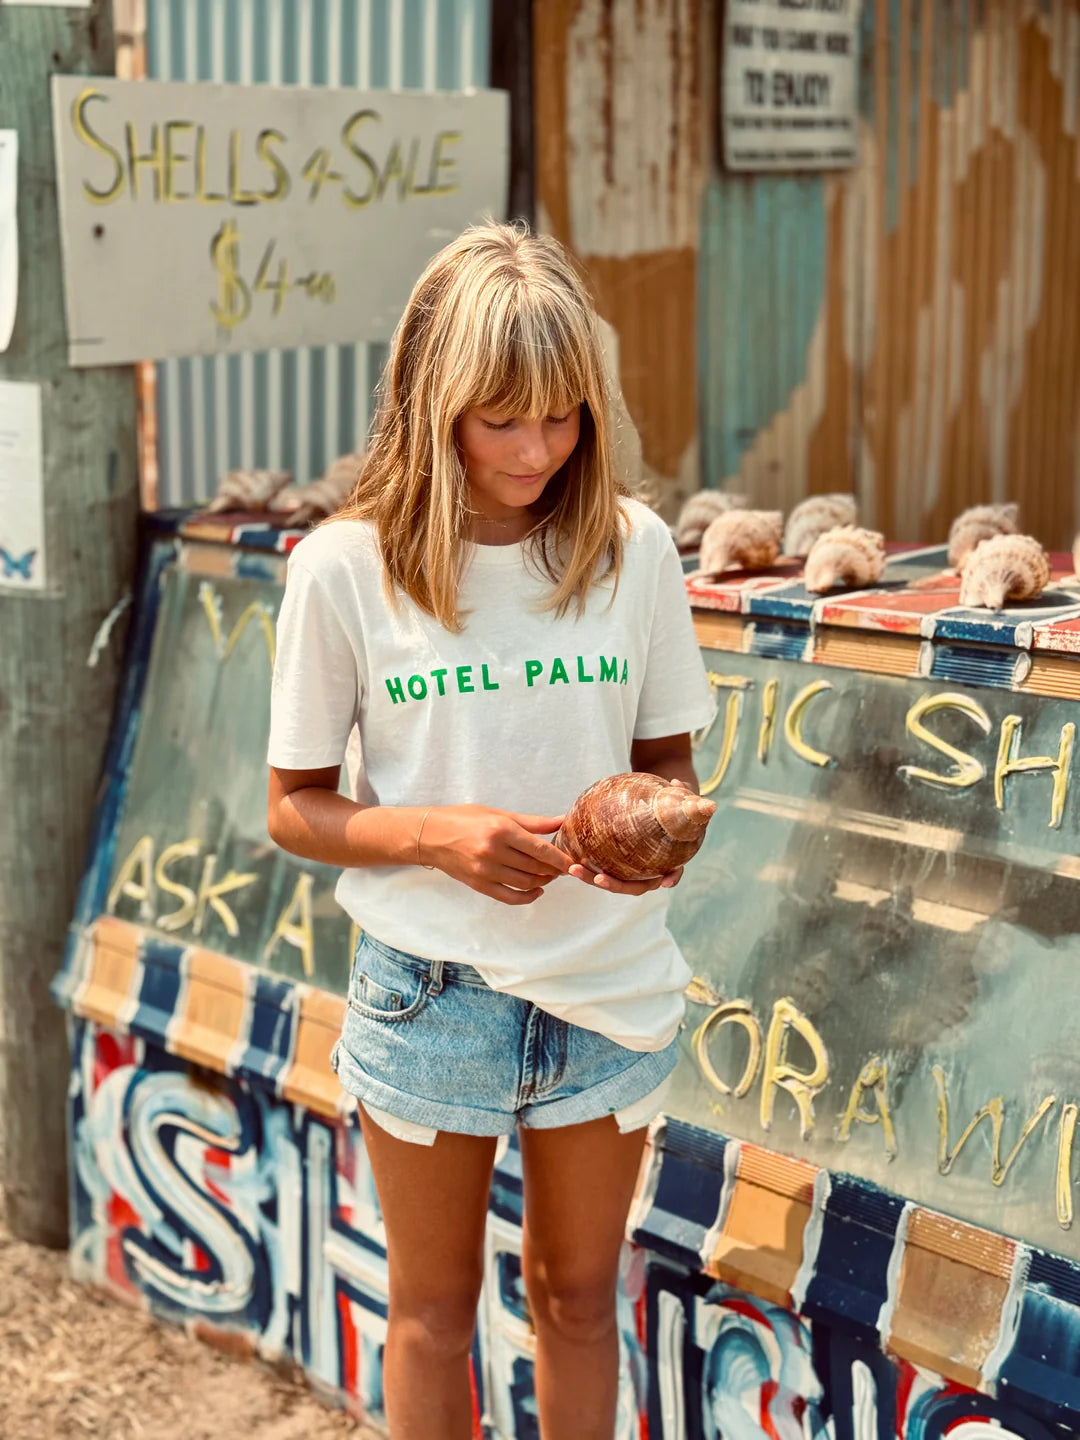 Little Palma Hotel Palma (Green) T-Shirt